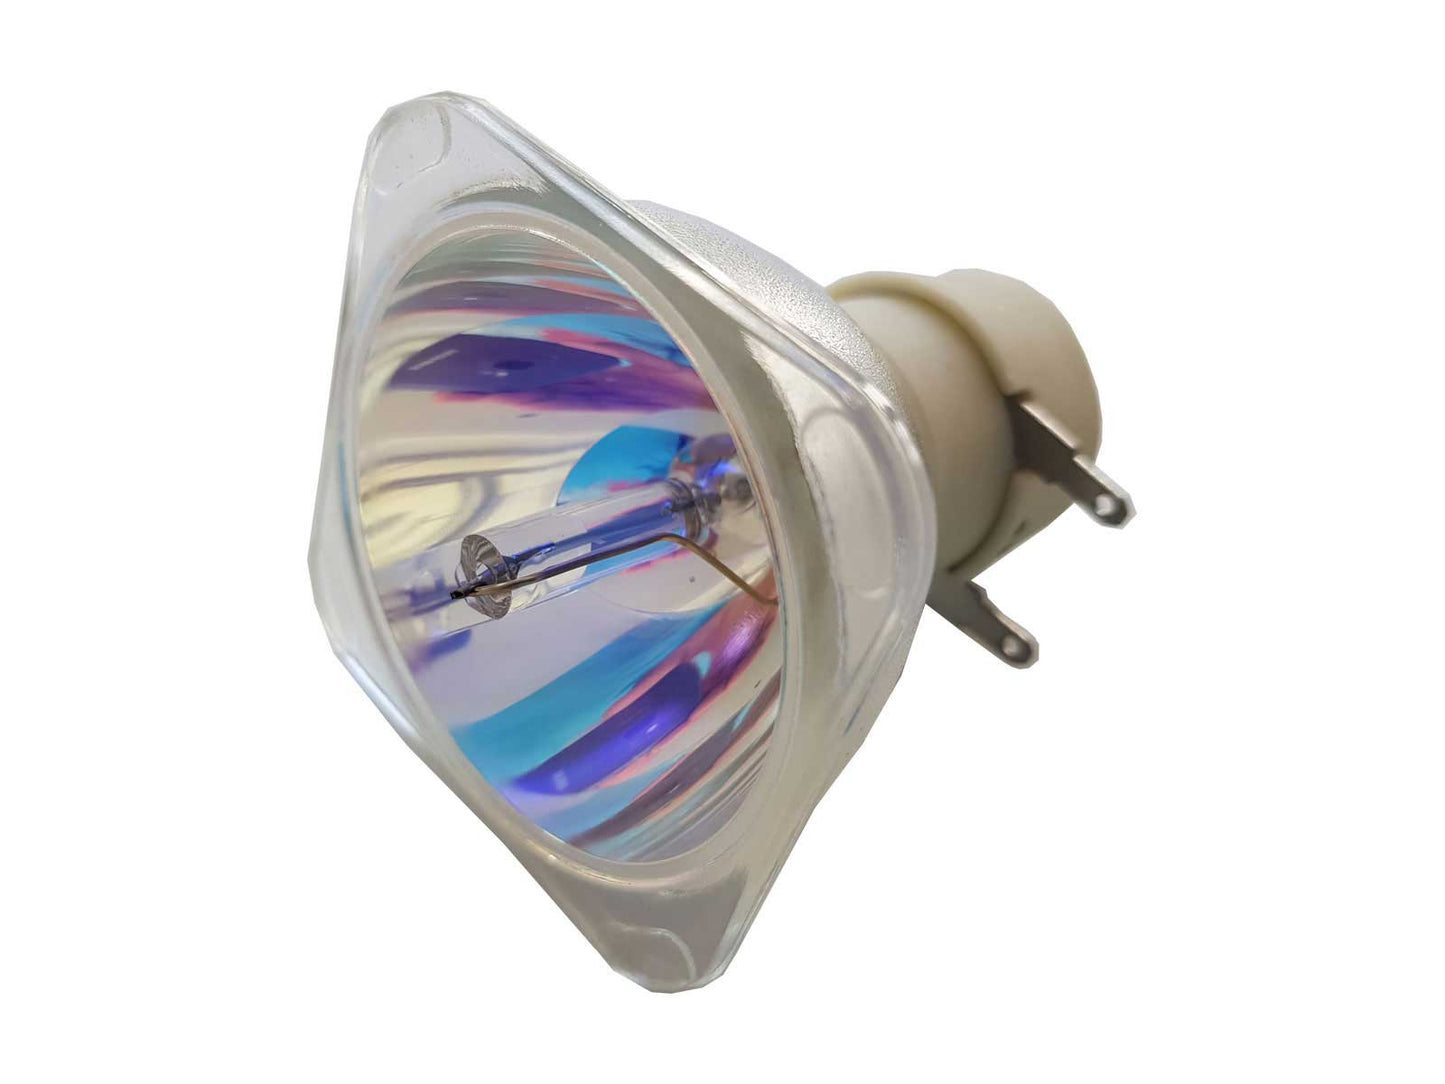 azurano Beamerlampe für ACER MC.JMY11.001 Ersatzlampe Projektorlampe - Bild 10